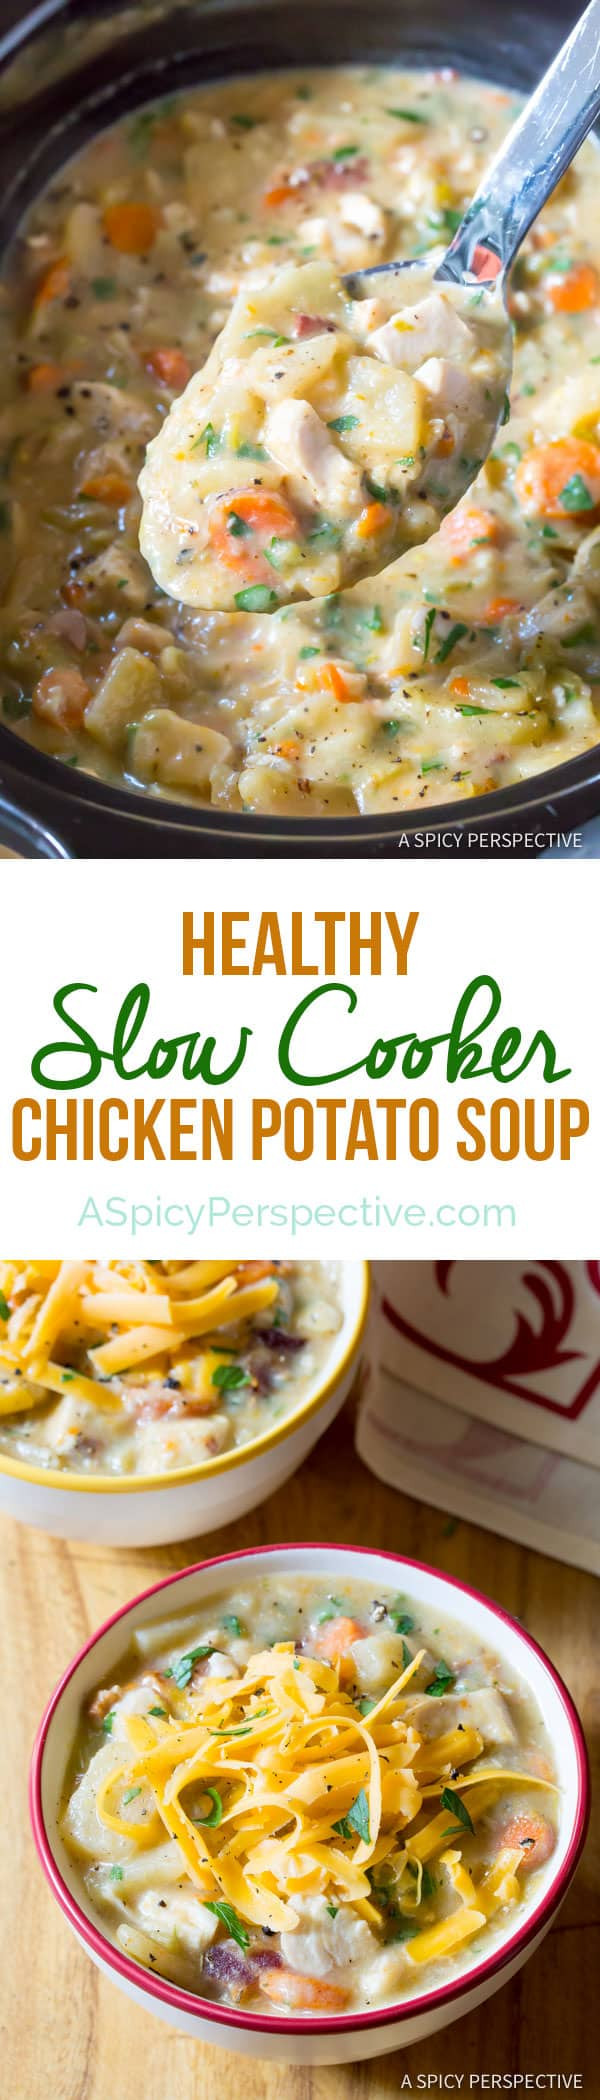 Healthy Potato Soup Recipe Slow Cooker
 Healthy Slow Cooker Chicken Potato Soup VIDEO A Spicy